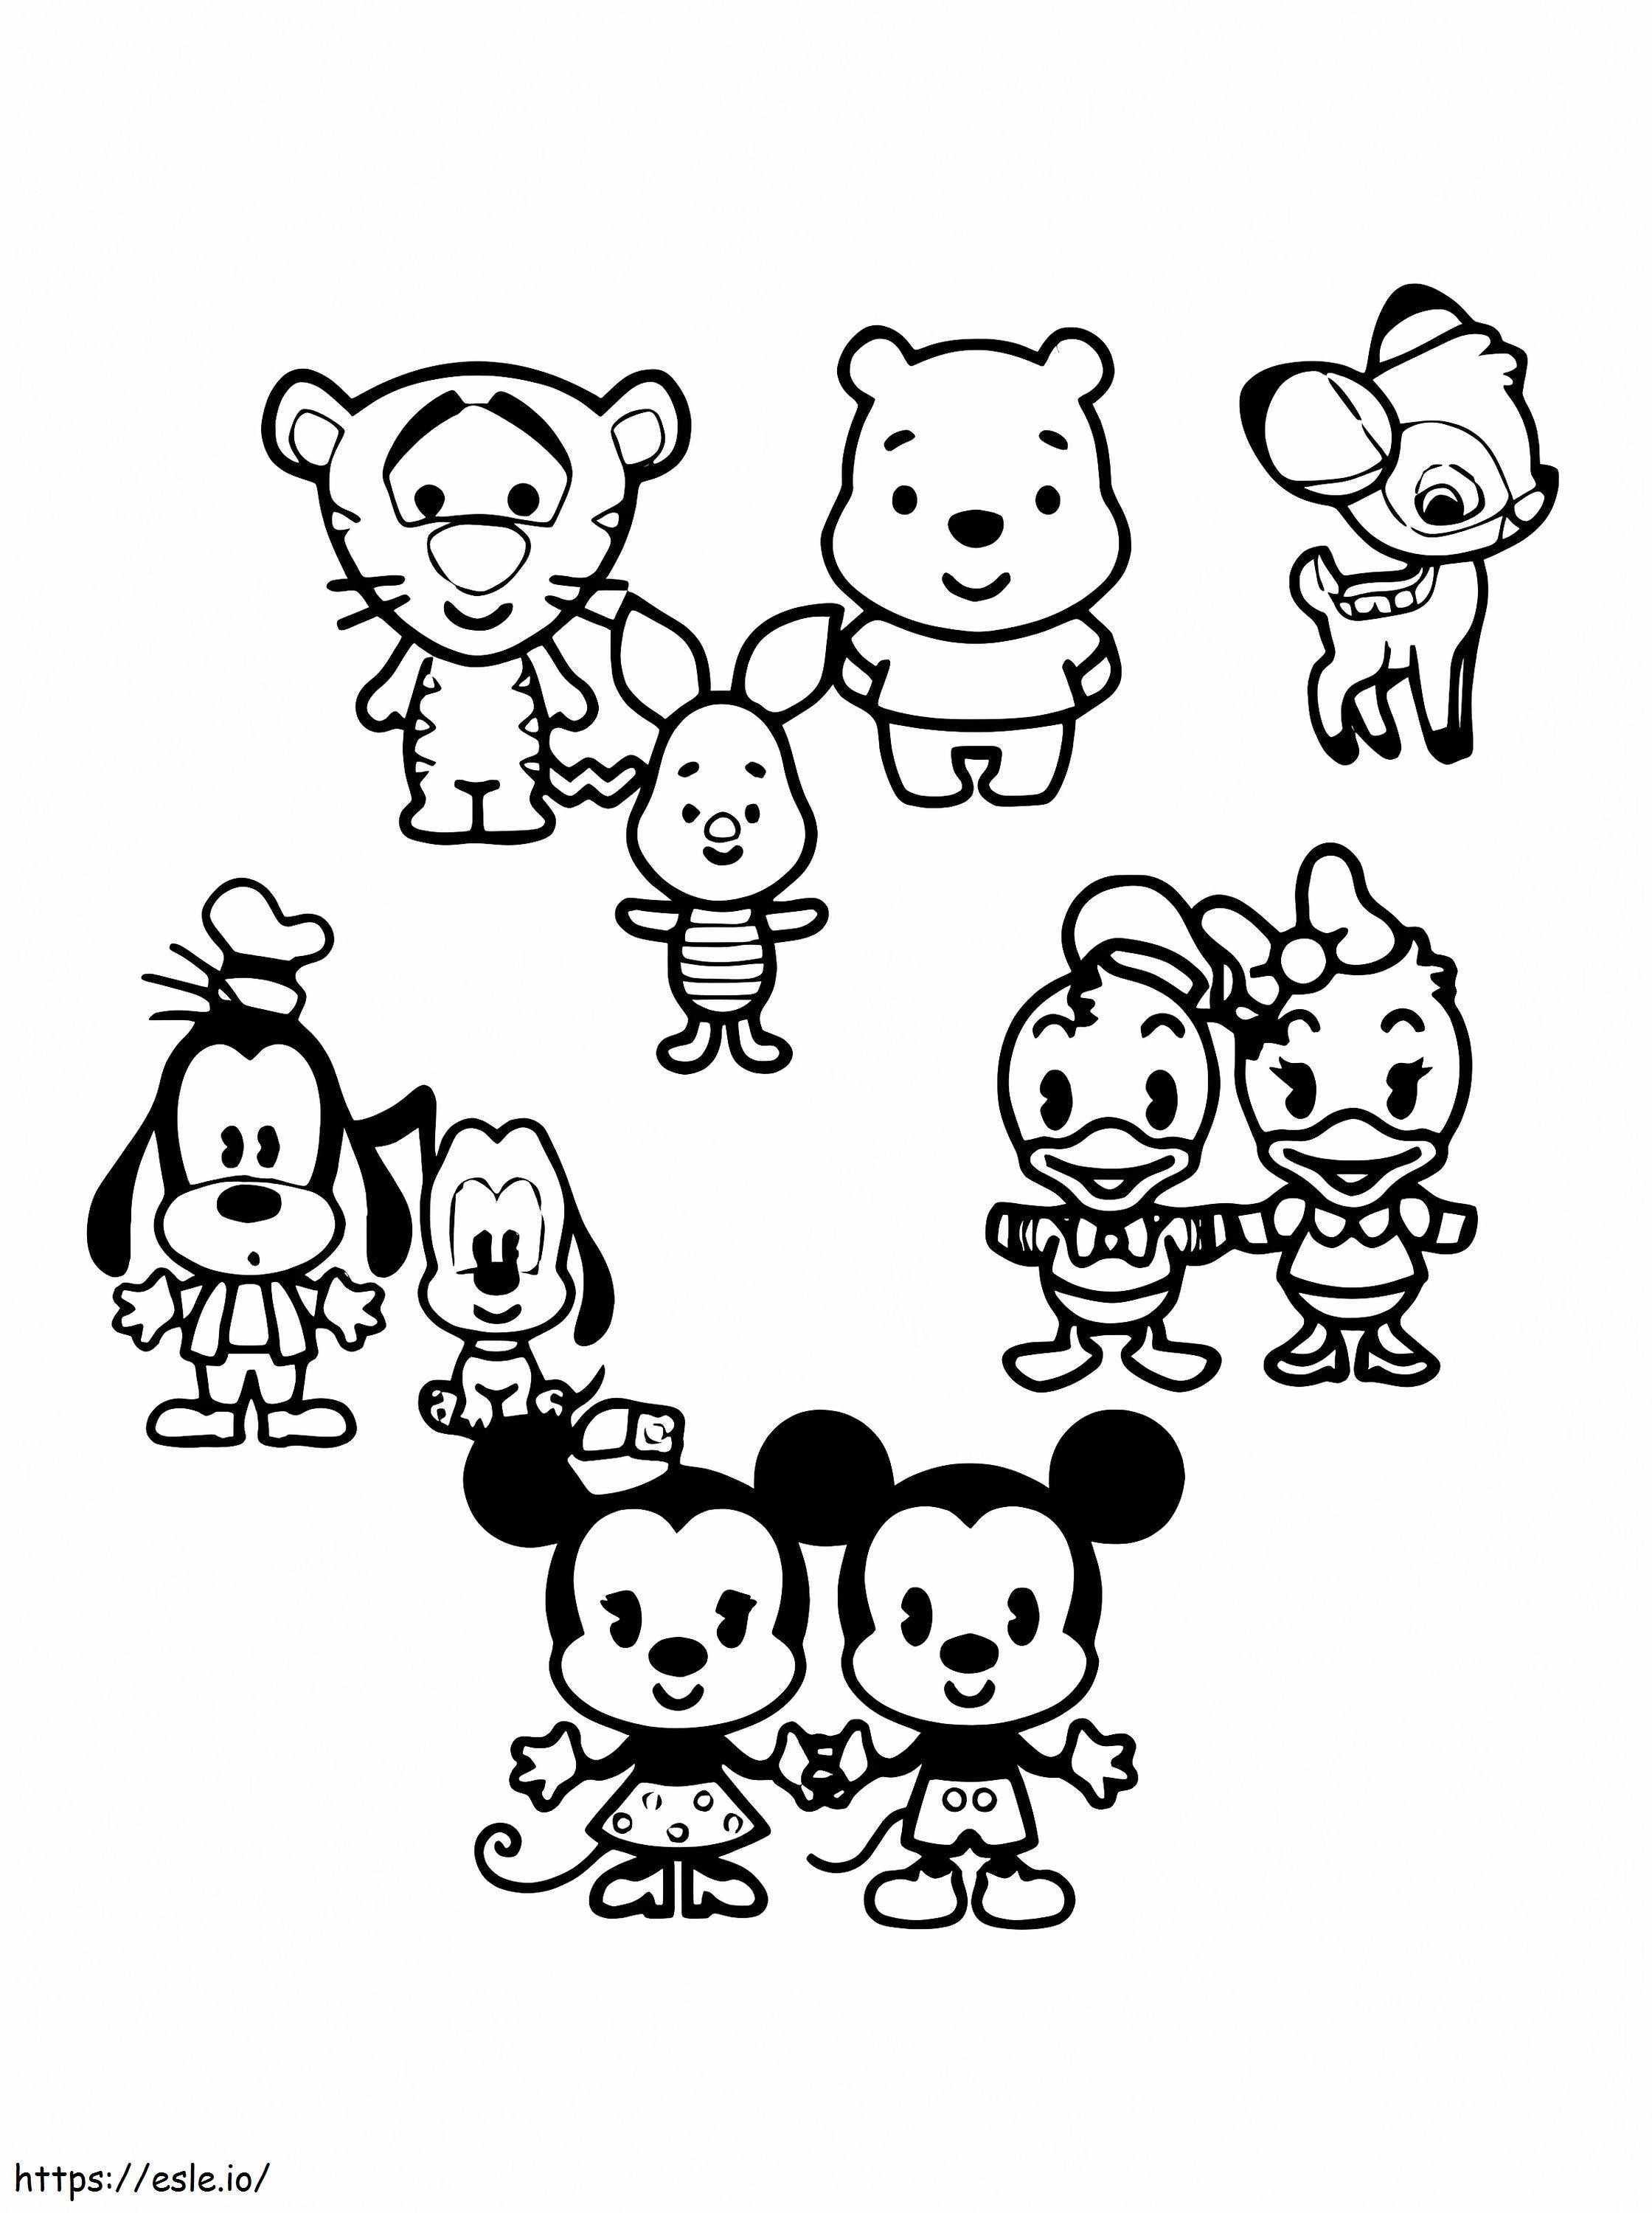 Free Disney Cuties coloring page